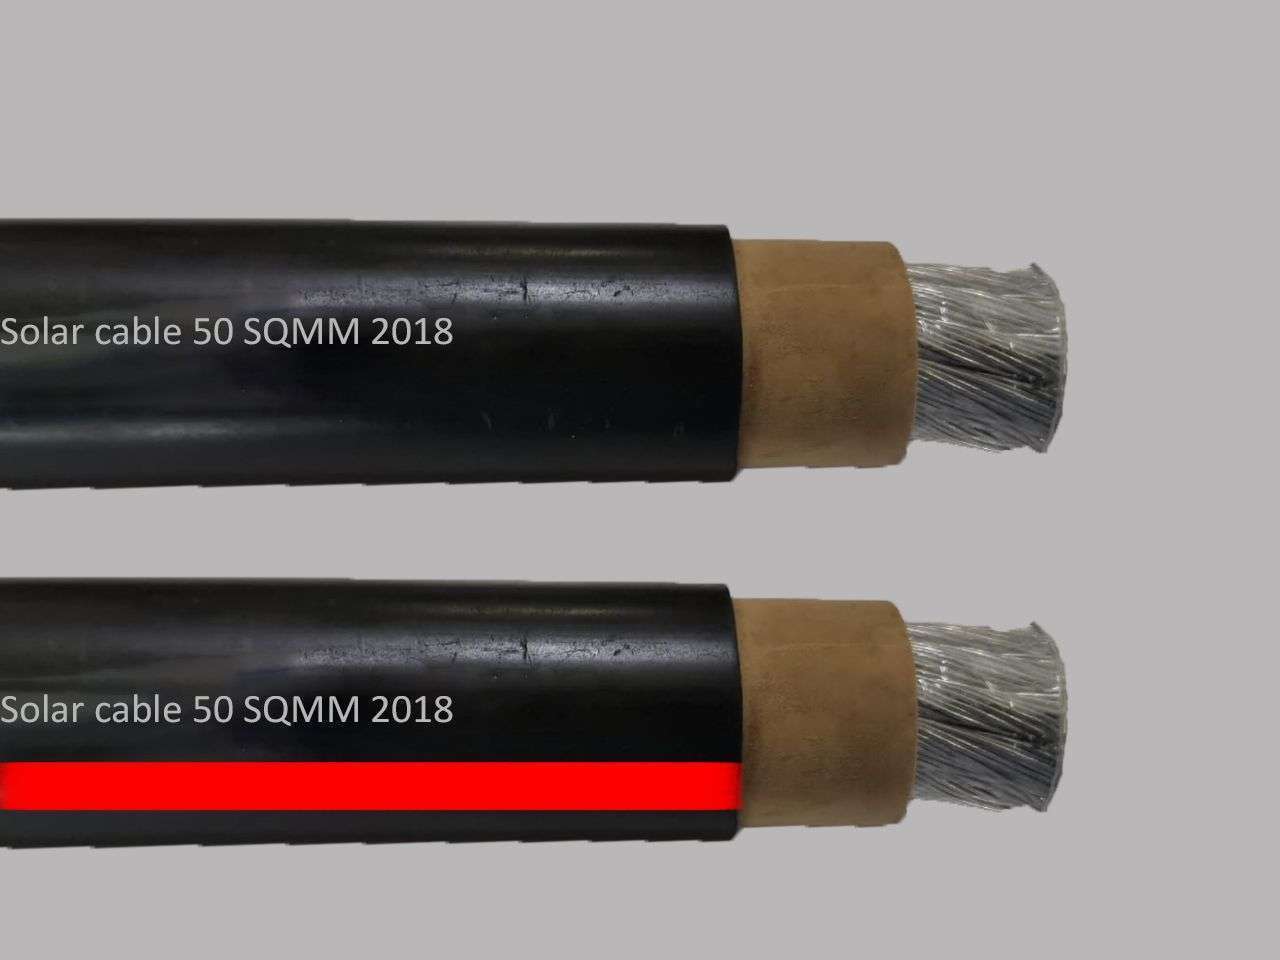 en-certified-dc-solar-cable-50sqm-500mtr-drum-blk.jpg